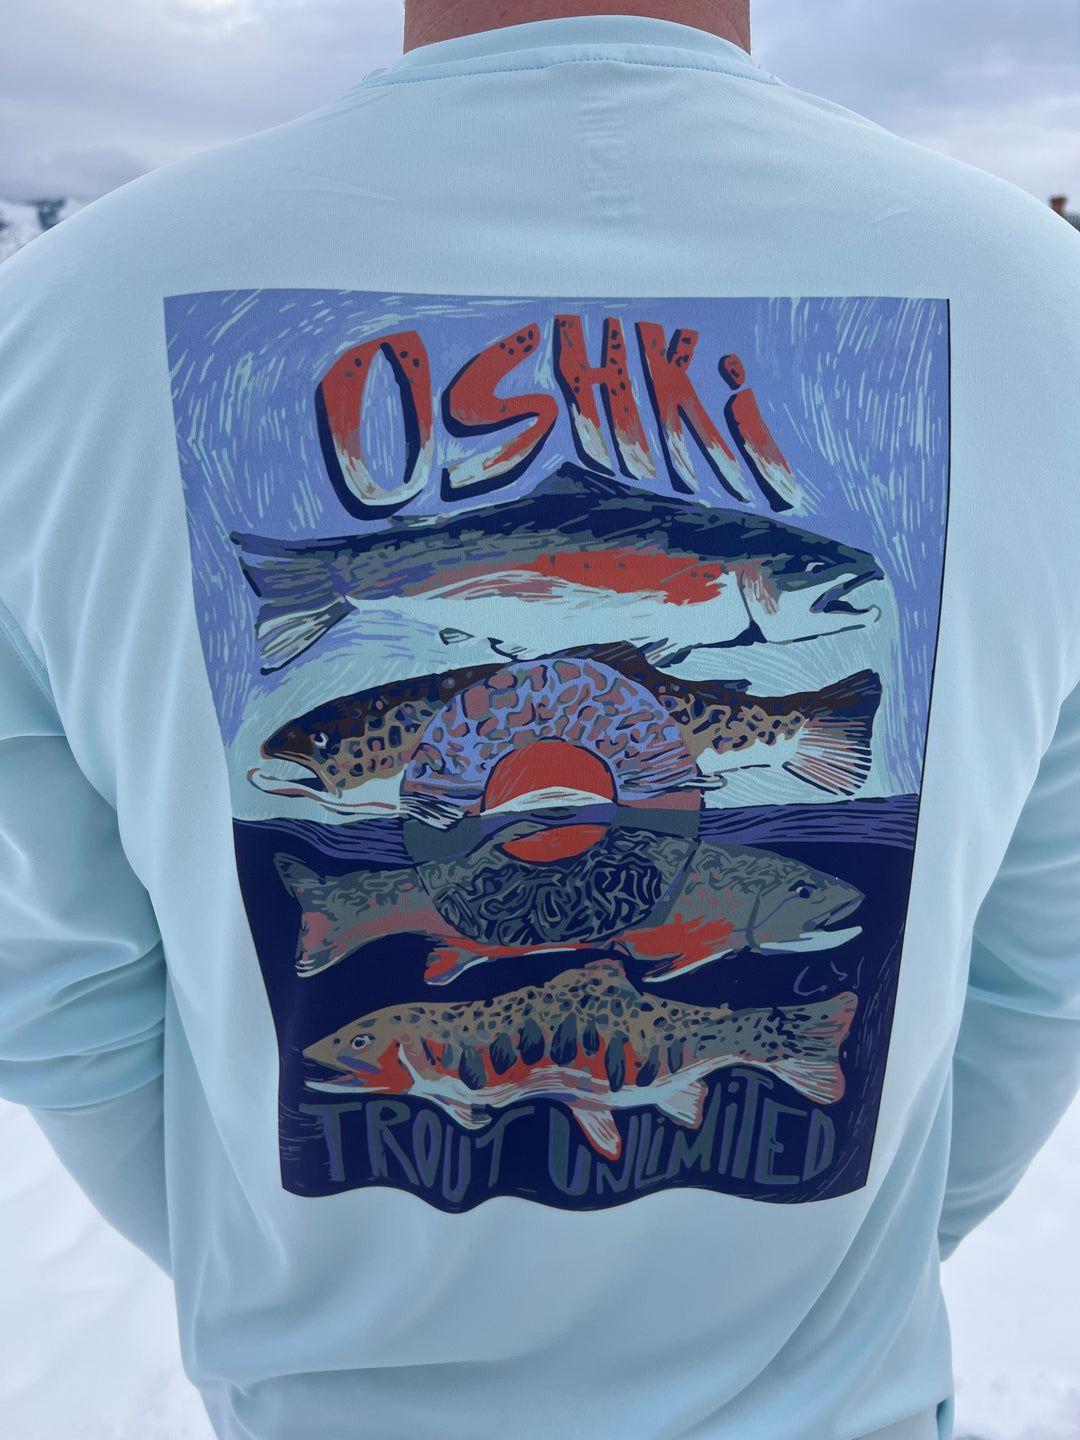 Oshki Collaboration with Trout Unlimited - Oshki